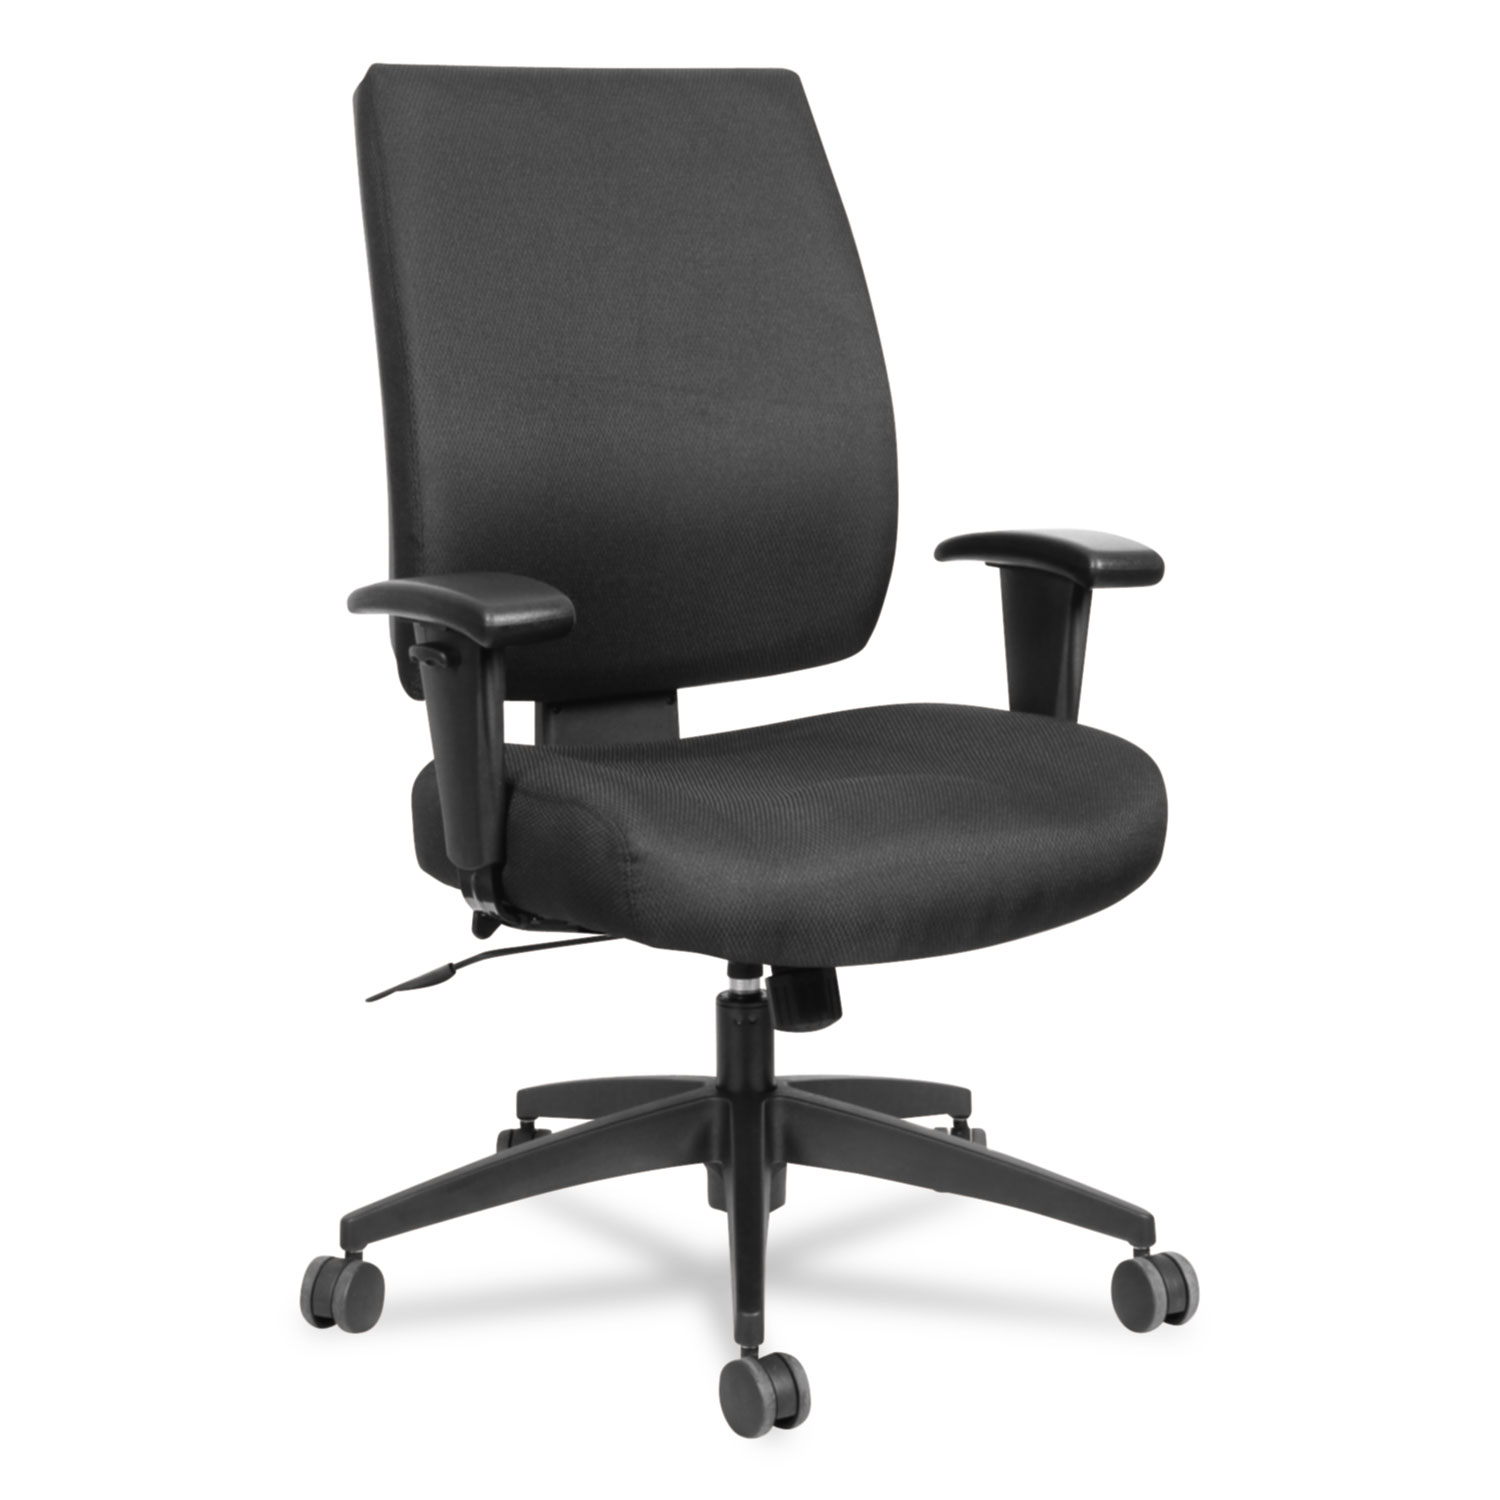  Alera ALEHPS4201 Alera Wrigley Series High Performance Mid-Back Synchro-Tilt Task Chair, Supports up to 275 lbs., Black Seat/Back, Black Base (ALEHPS4201) 